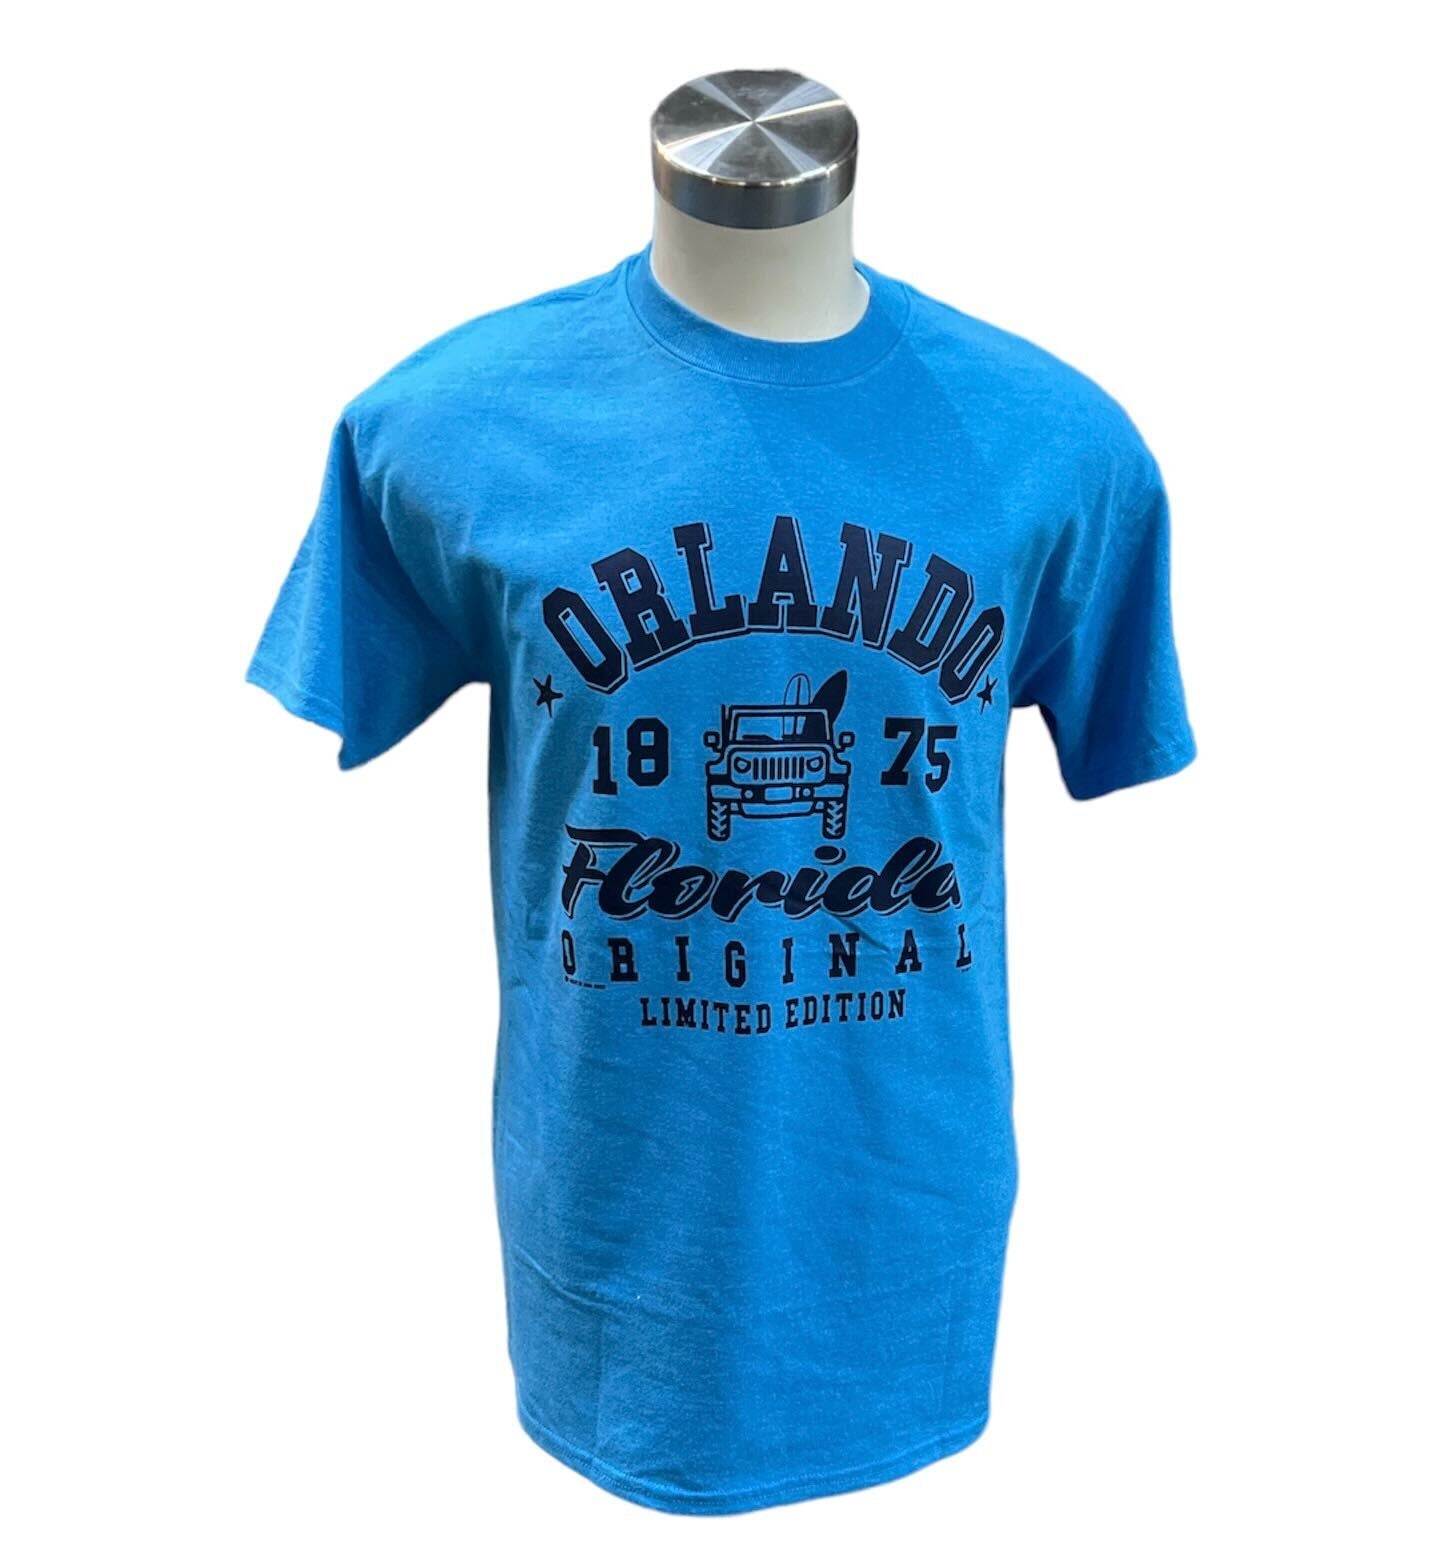 Orlando FL 1875 Original Limited Edition Blue T-Shirt